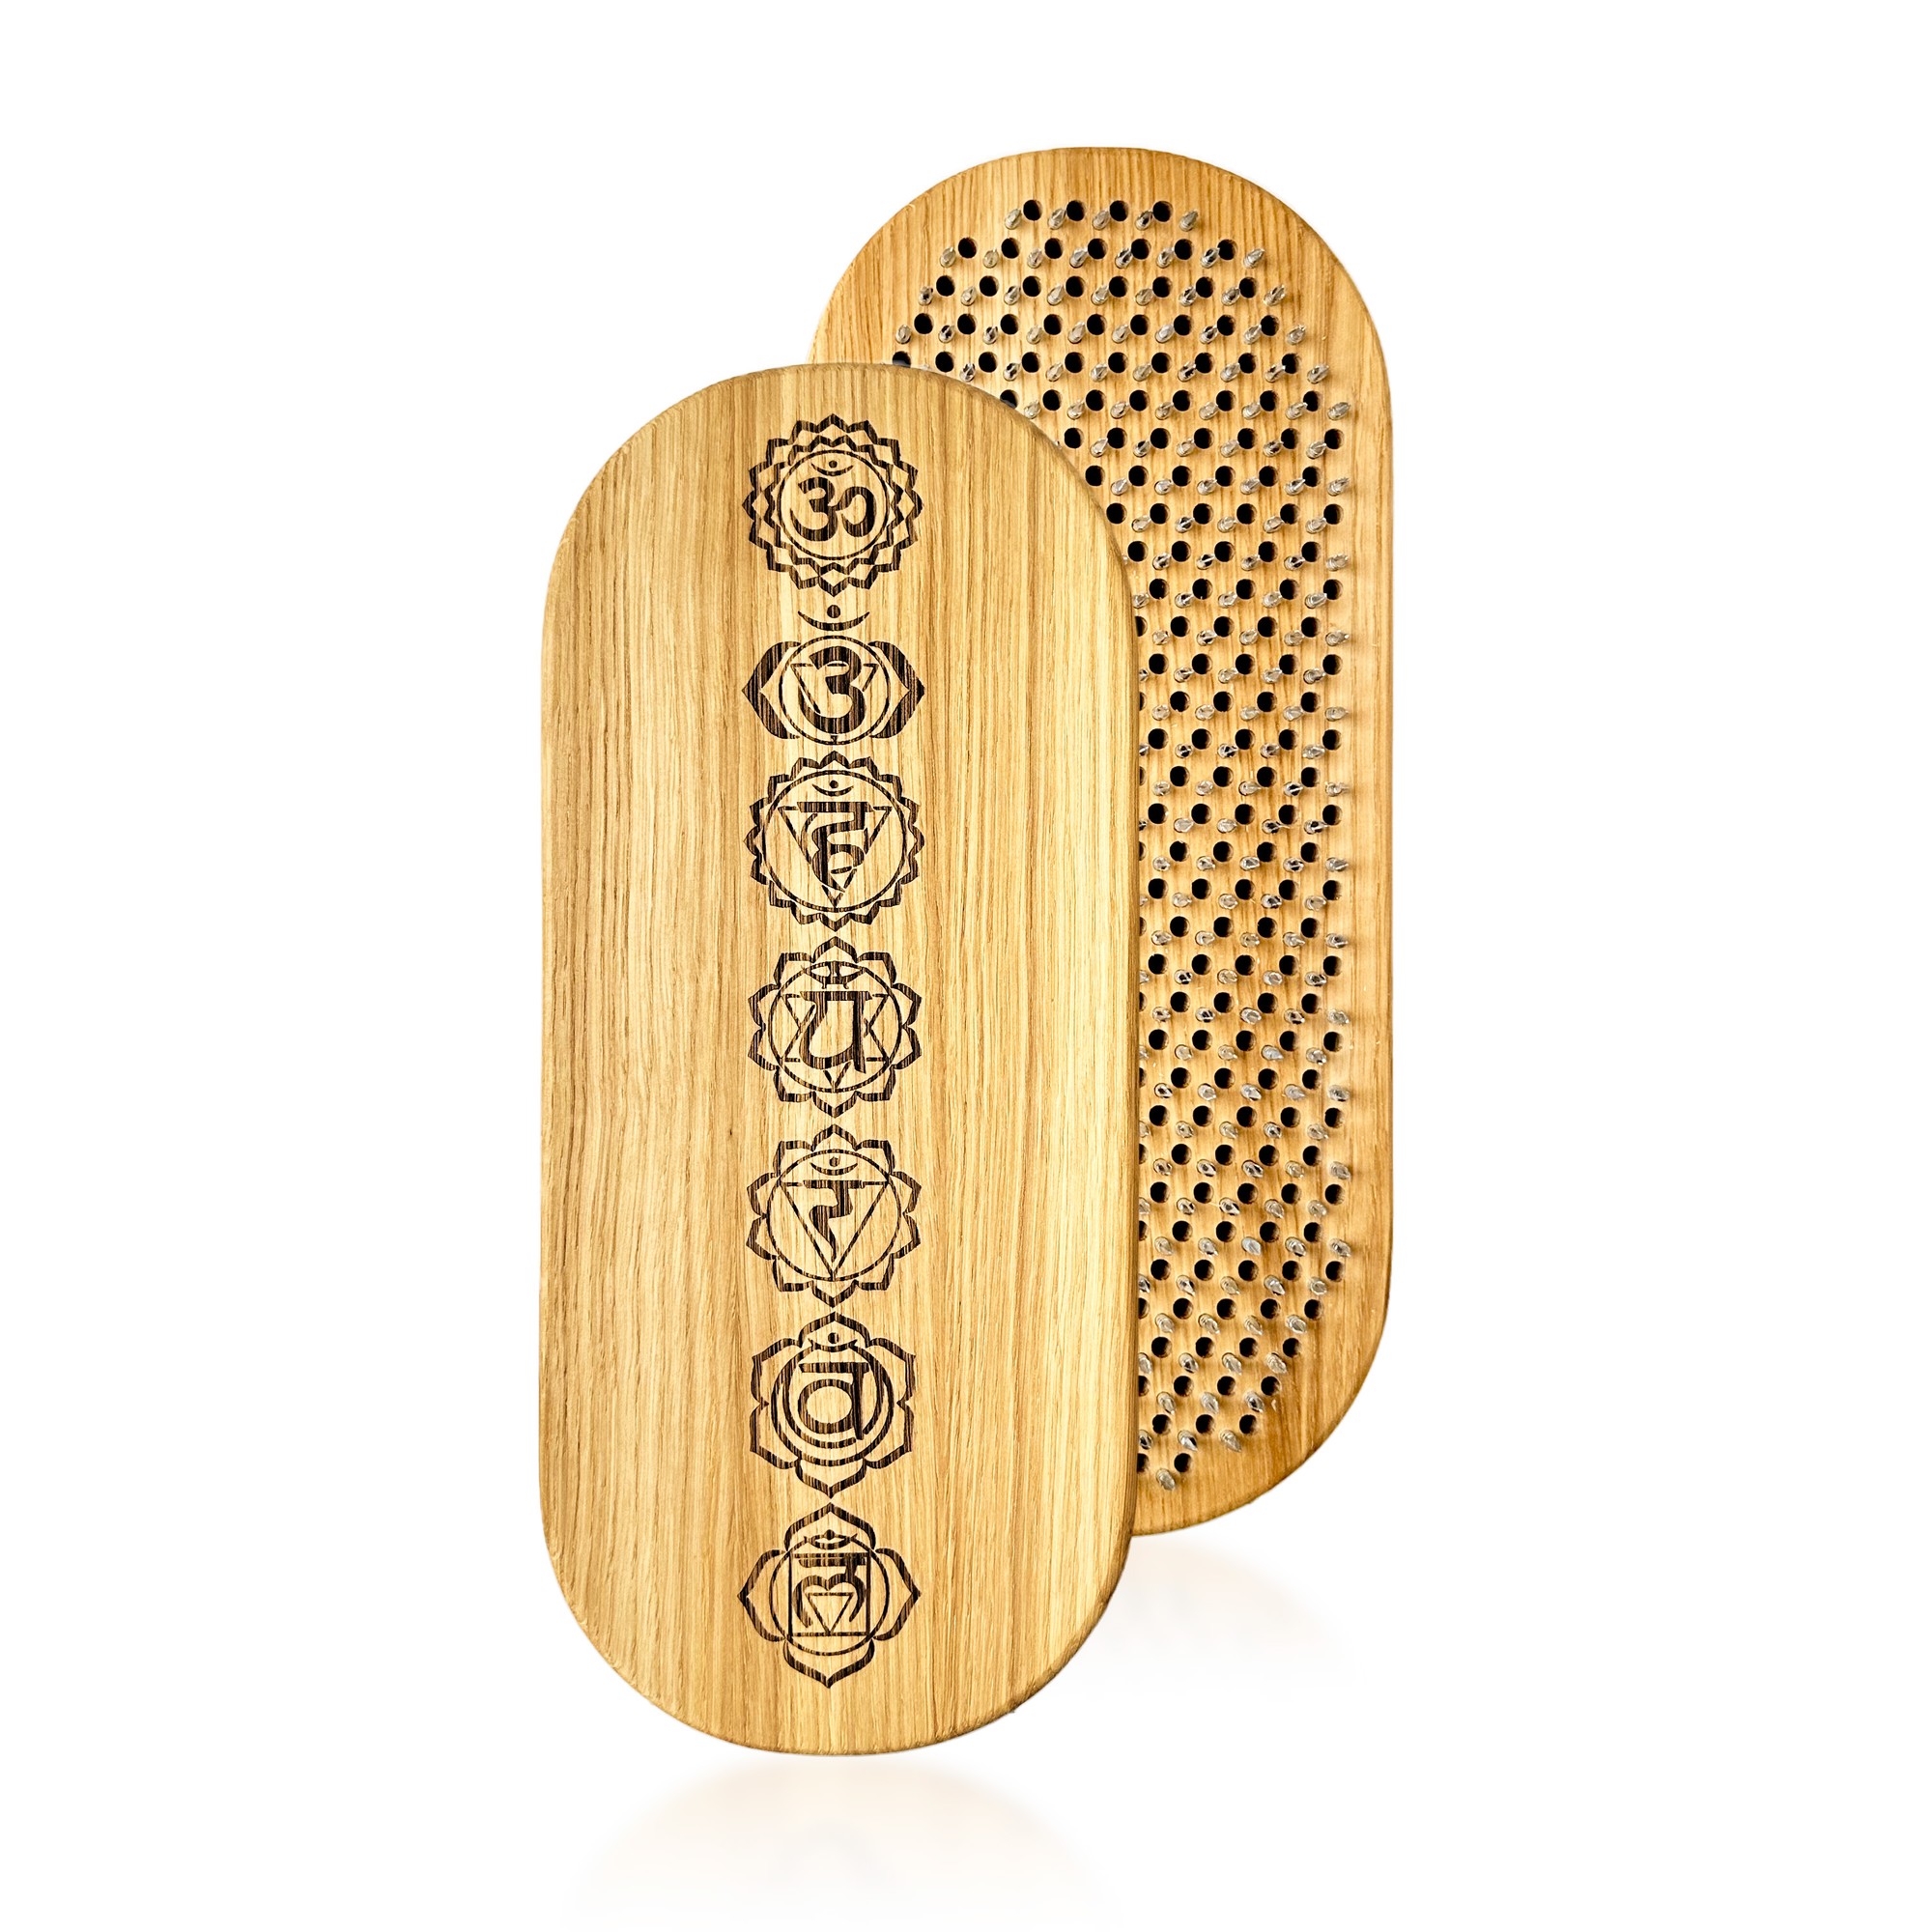 Sadhu Board Nails Oh! Sadhu from 100% Natural Oak Wood for Yoga Meditation, Oval Chakras